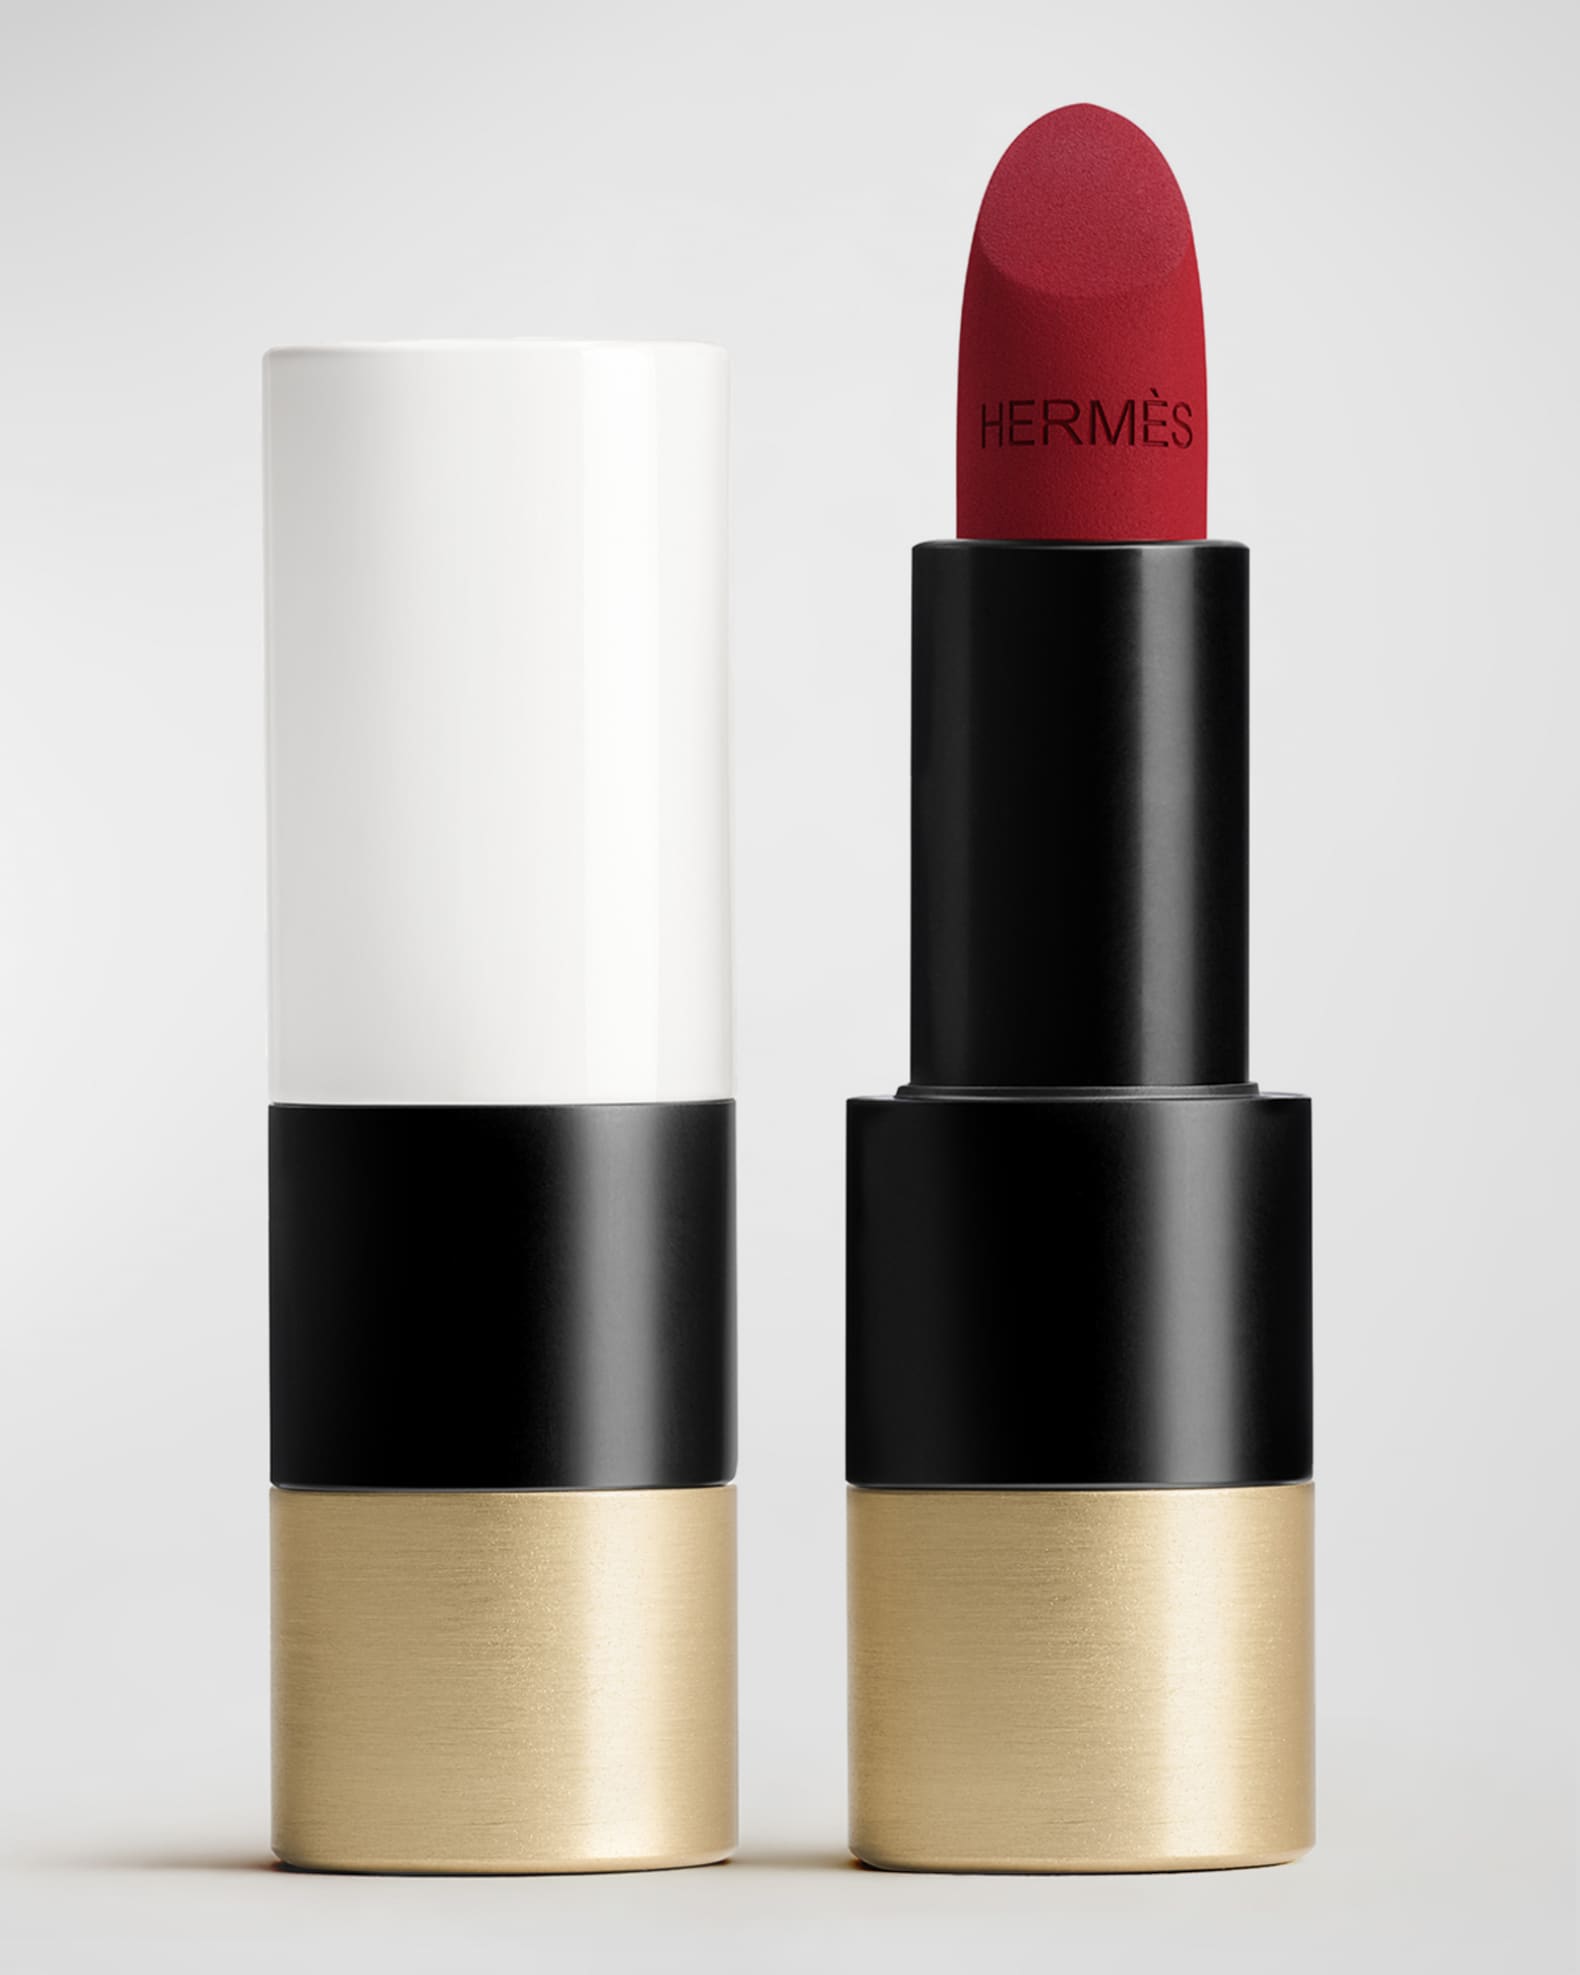 Louis Vuitton releases luxurious monogrammed lipstick case